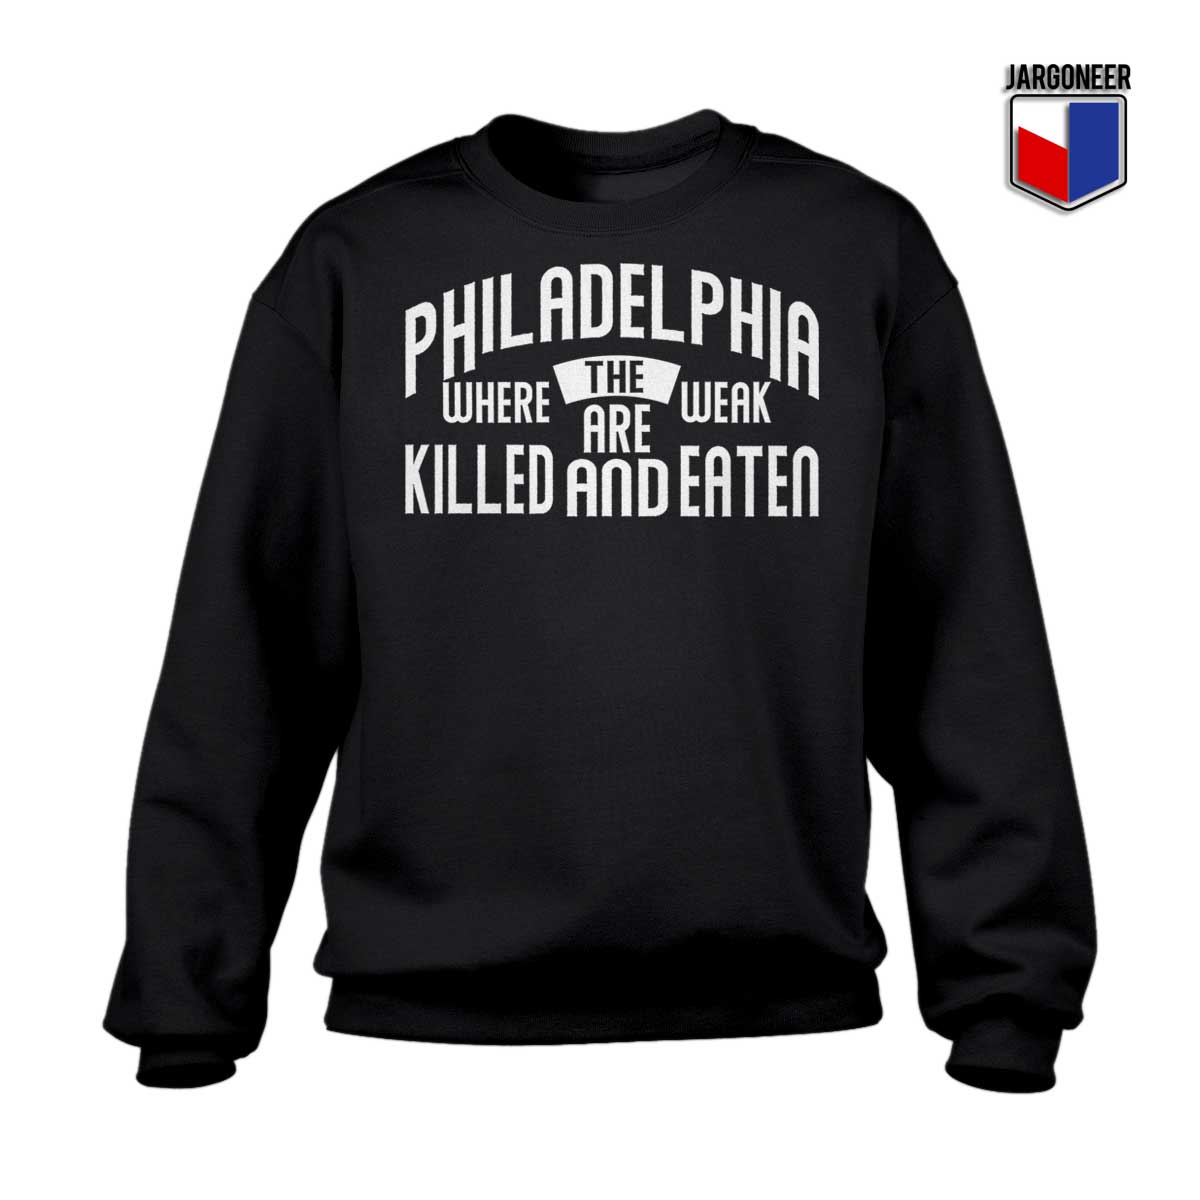 PHILADELPHIA WHERE THE WEAK ARE KILLED AND EATEN Sweatshirt - Shop Unique Graphic Cool Shirt Designs